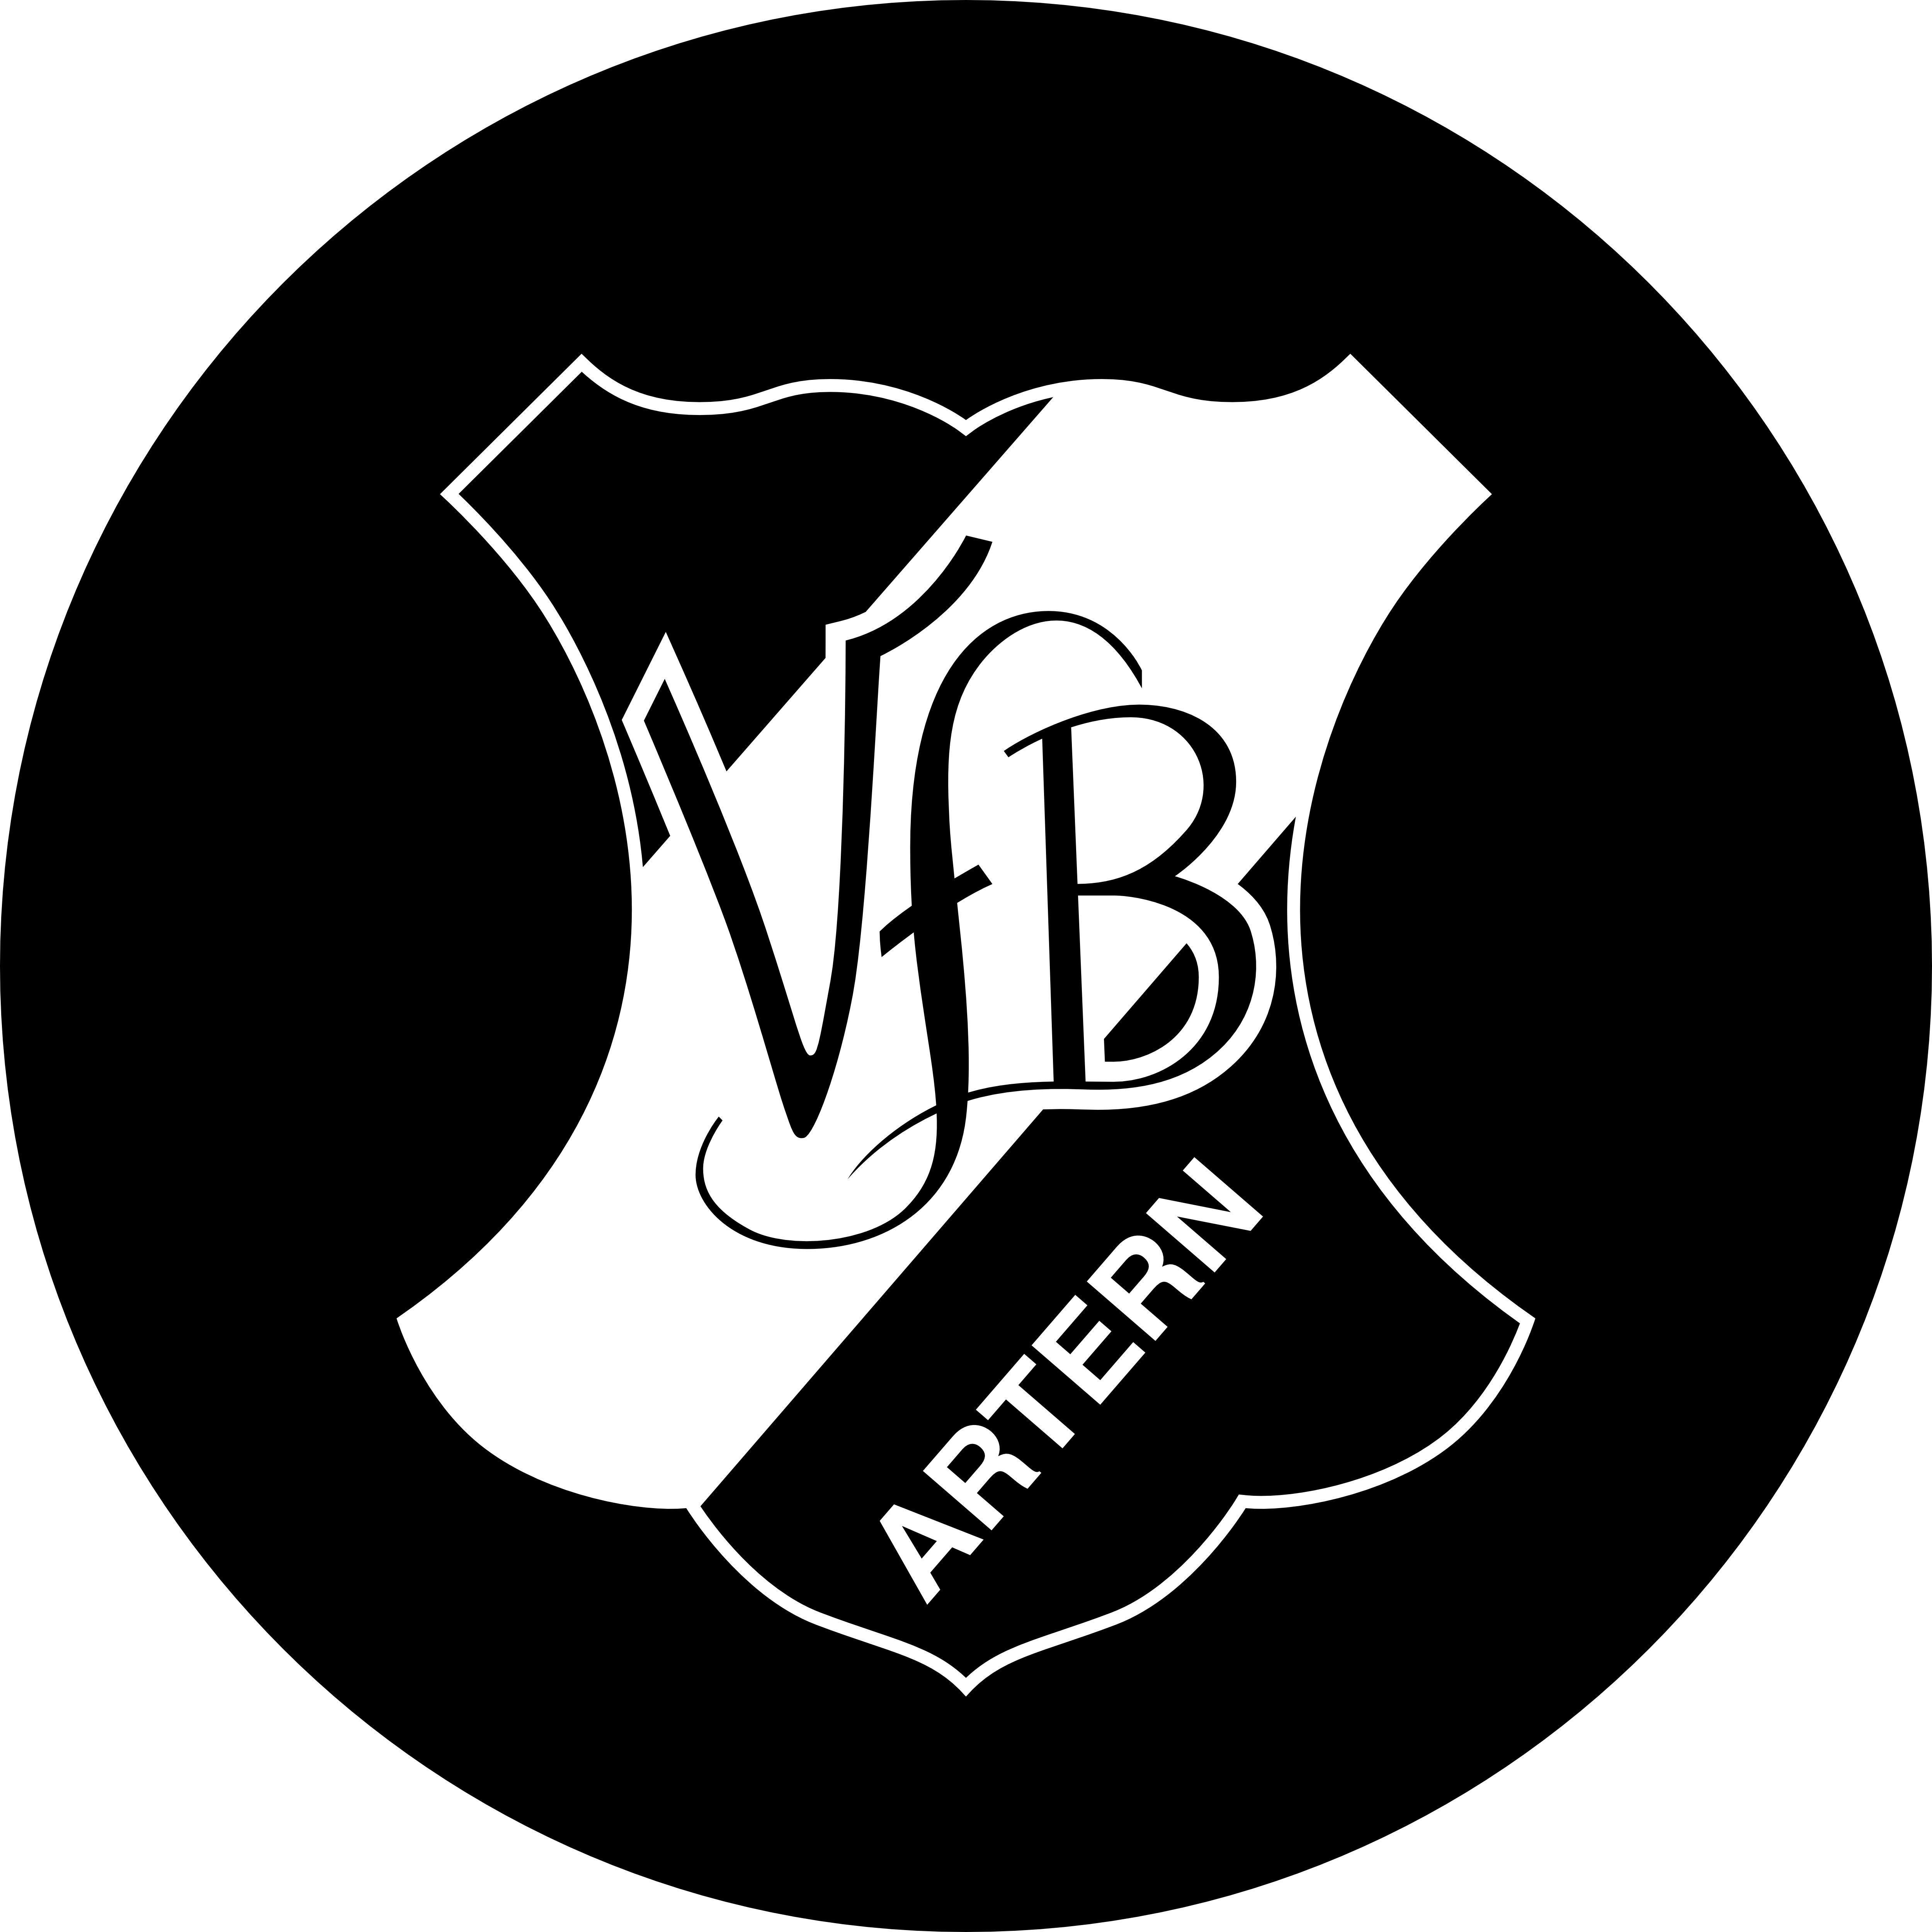 VfB Artern 1919 e.V.